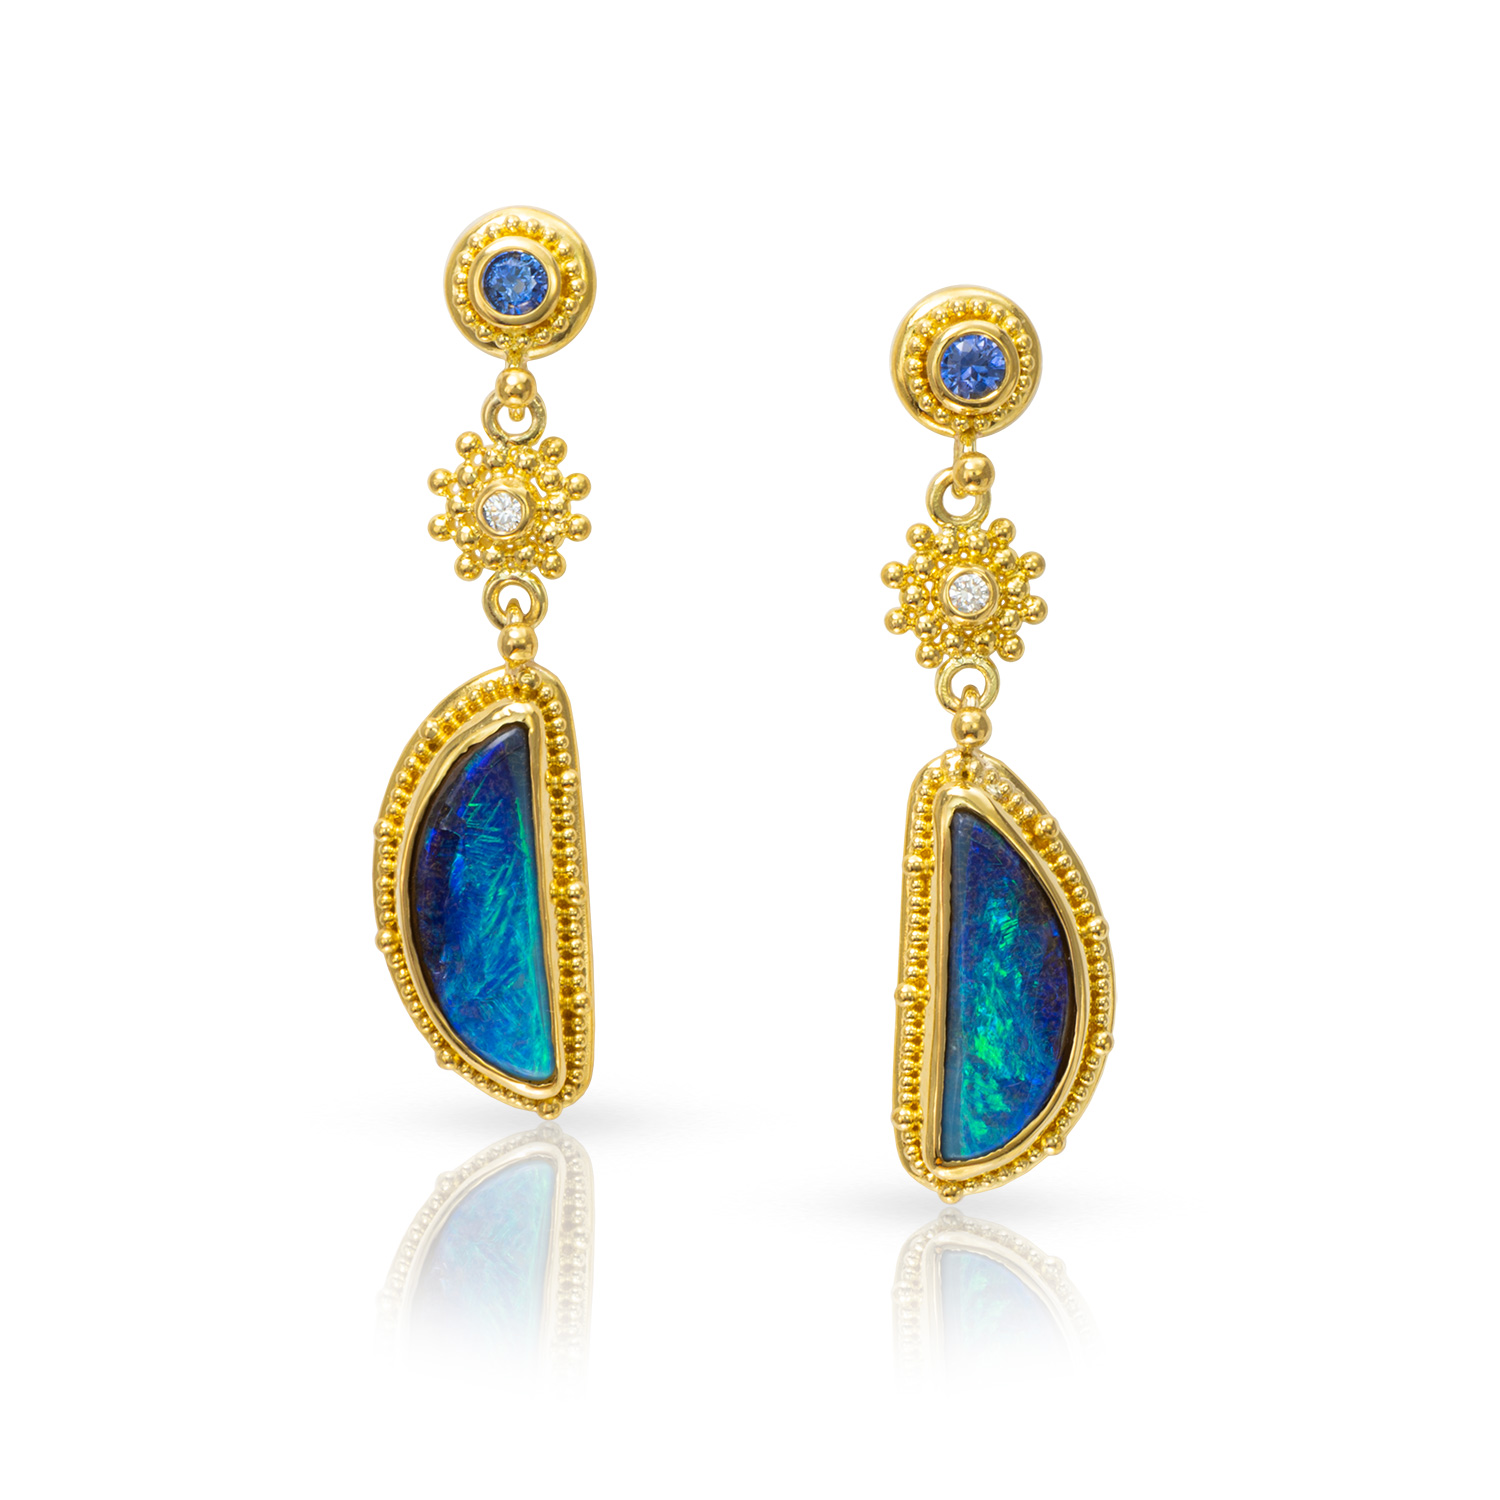 22kt granulation earrings with boulder opals